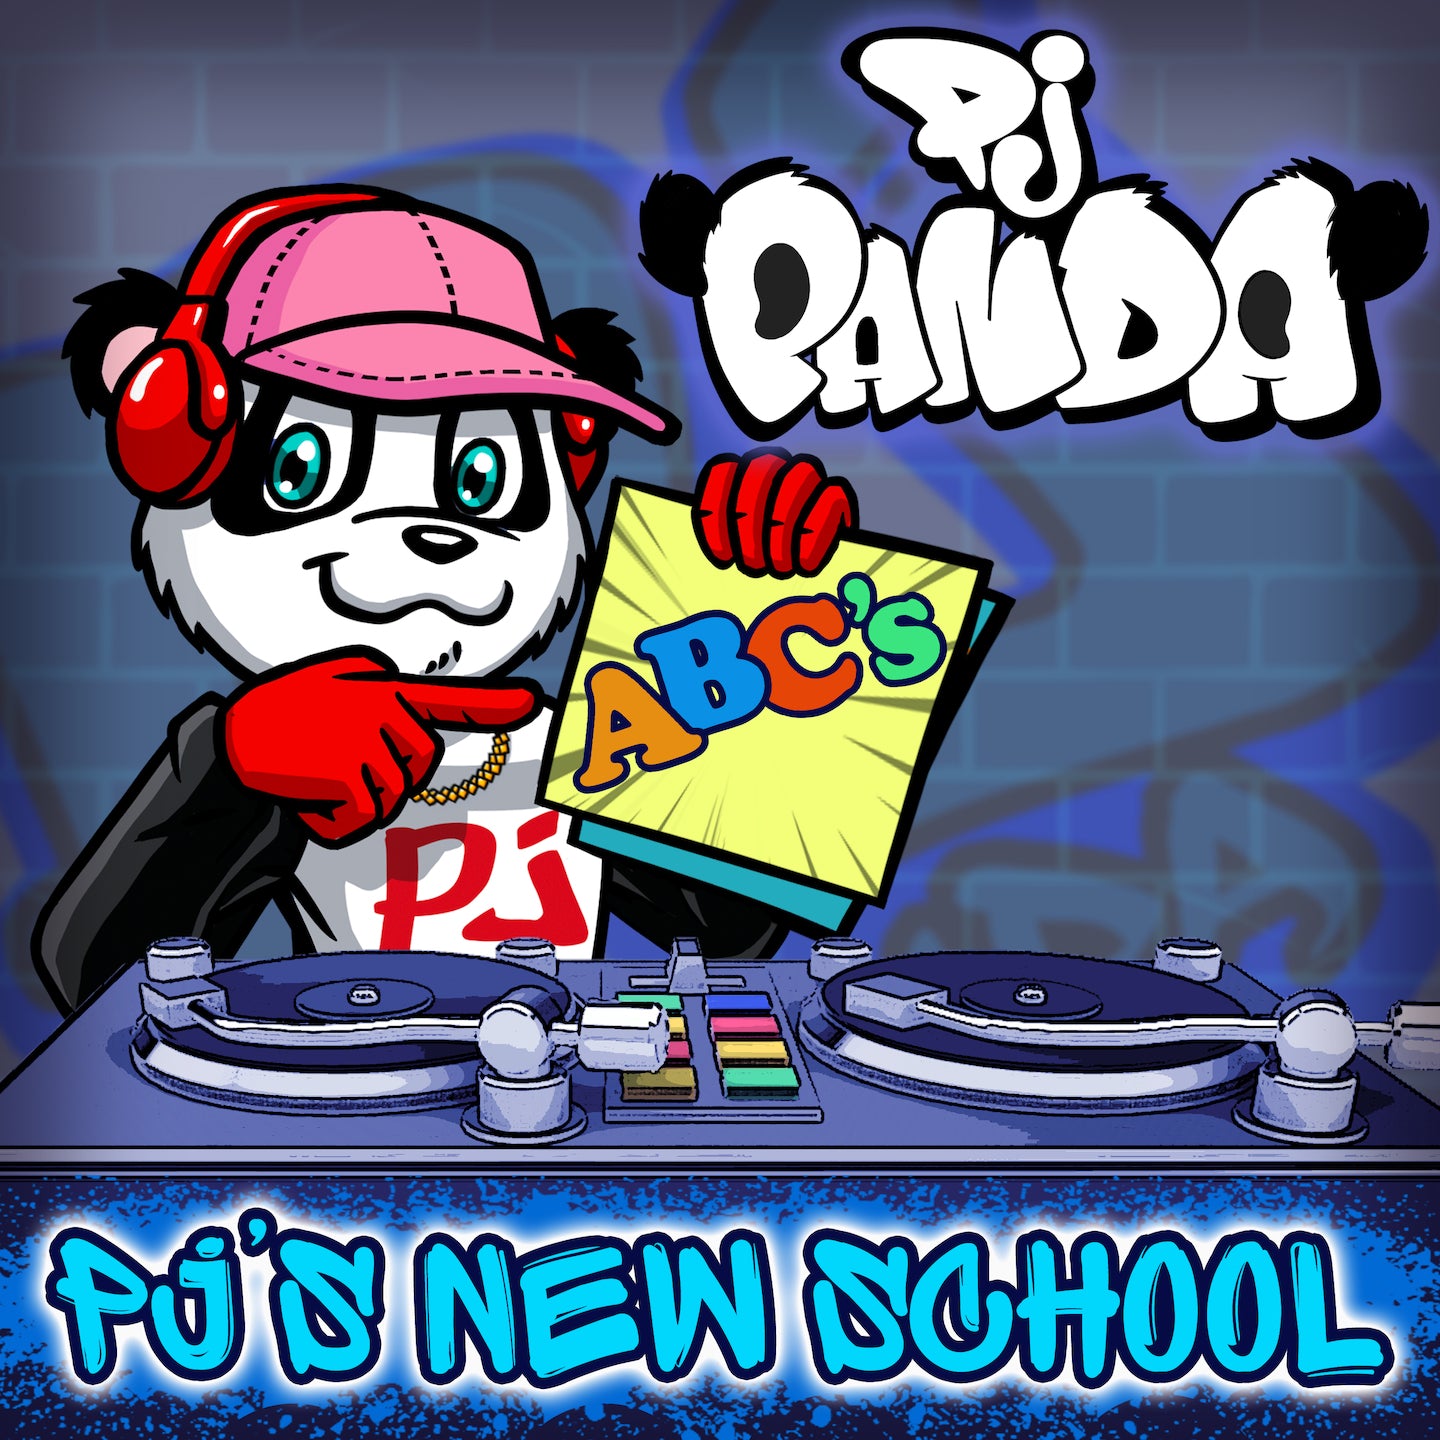 Pj Panda's New School